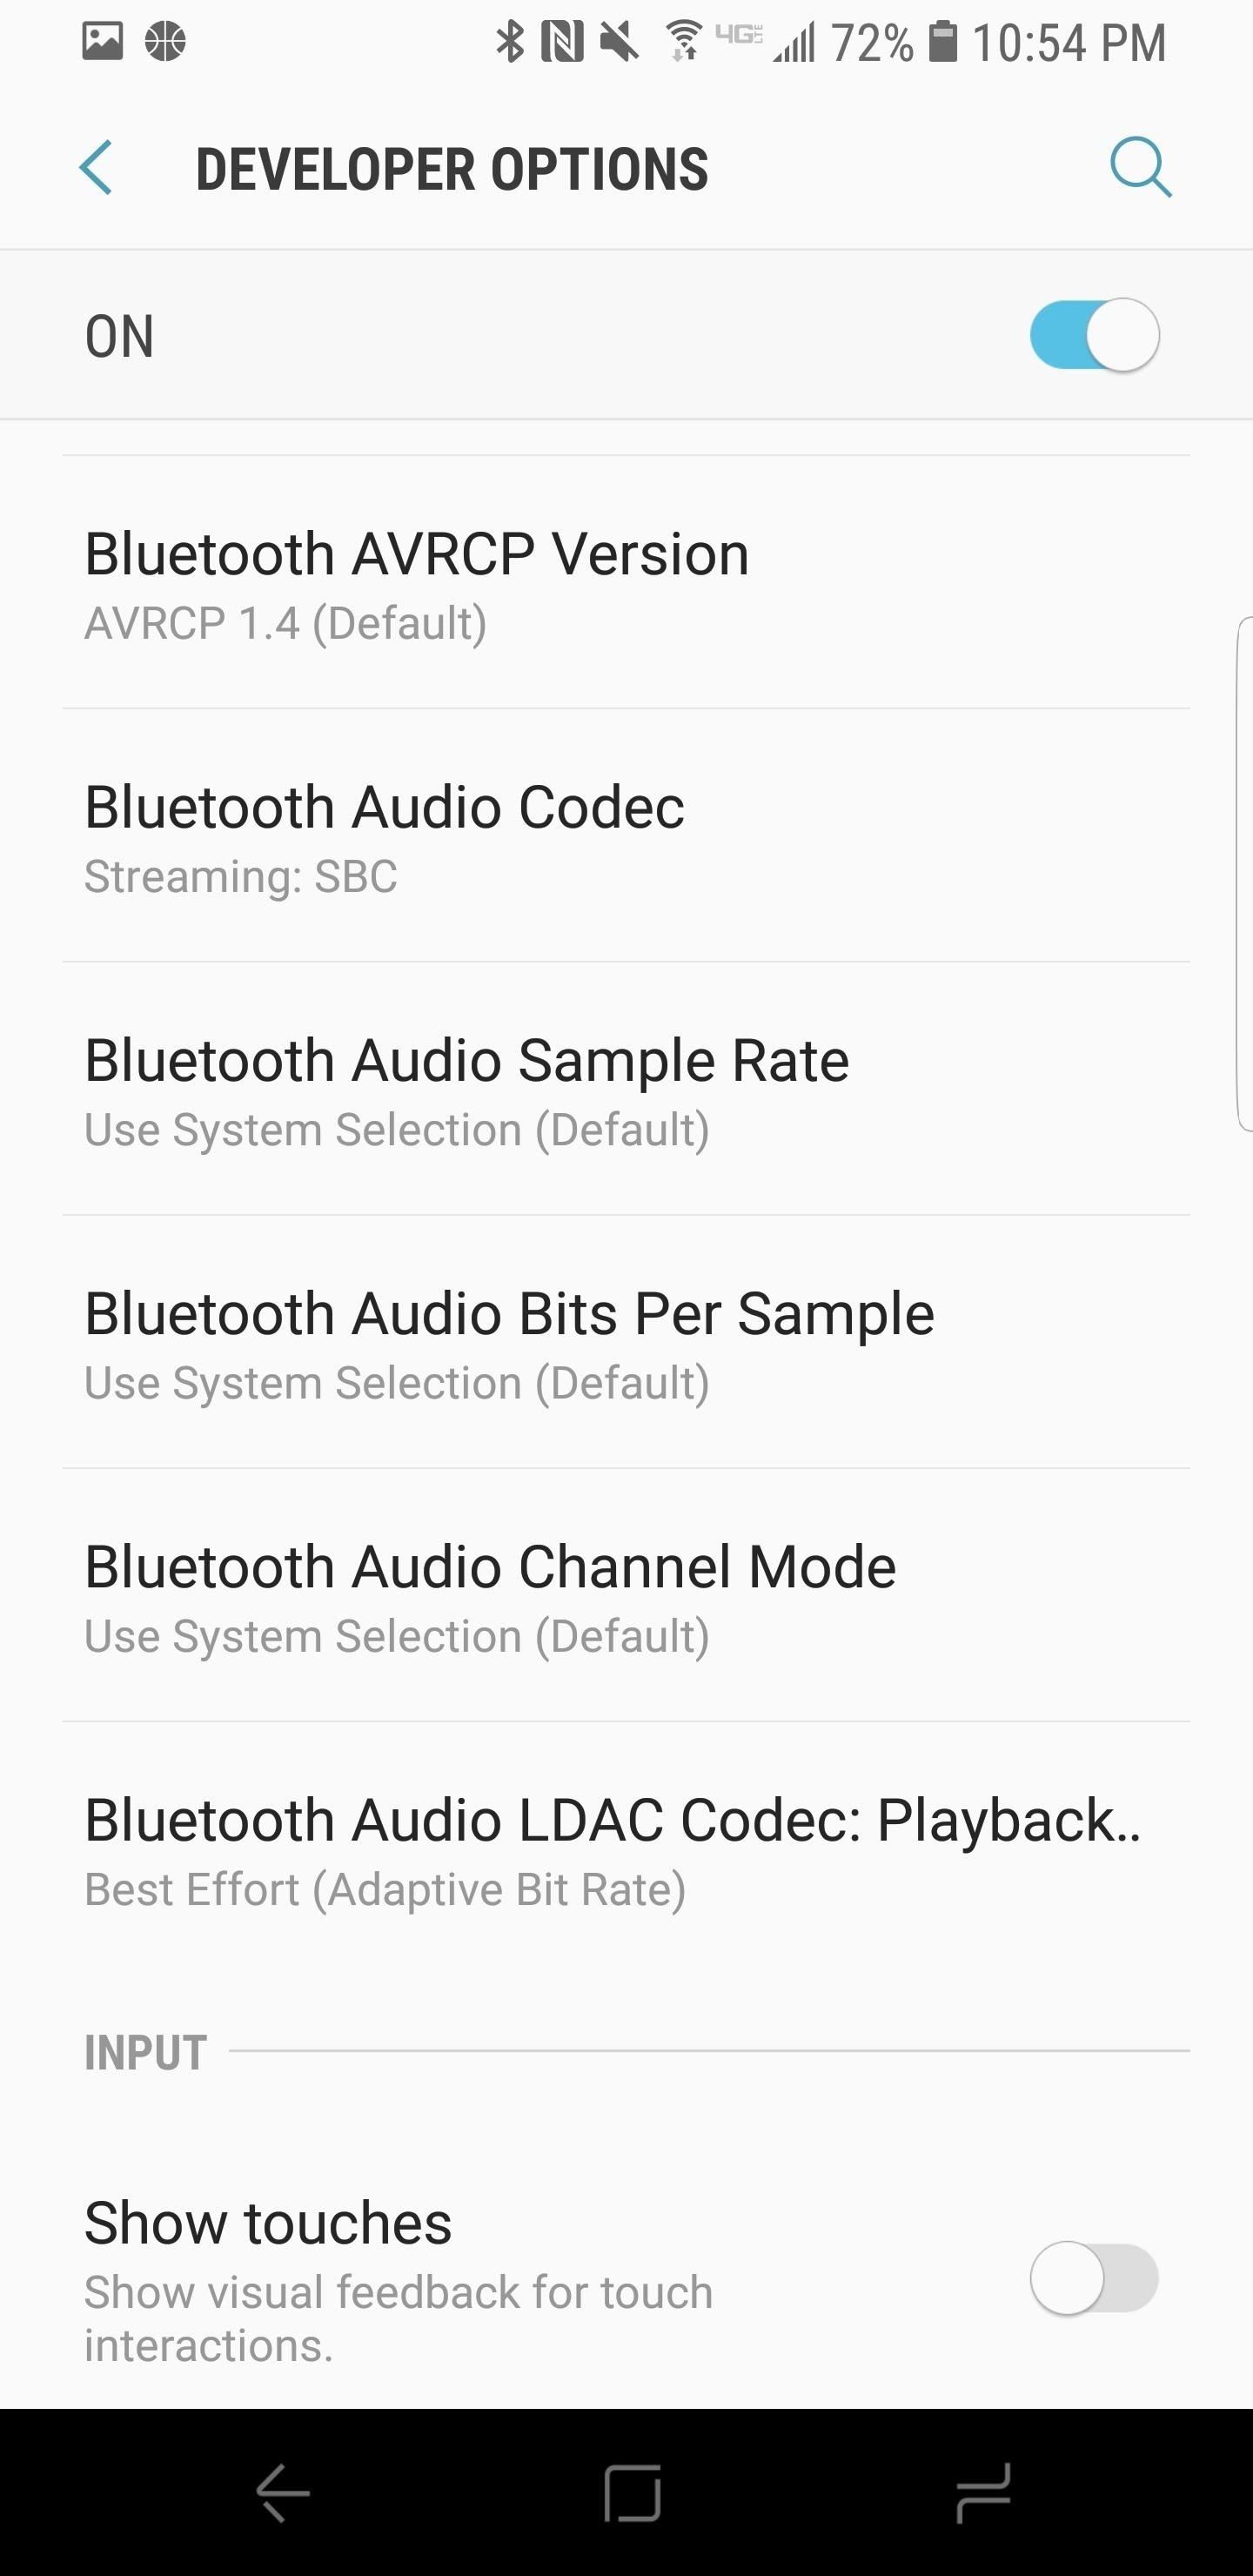 Improve Bluetooth Audio on Your Galaxy S9 with Custom Codecs